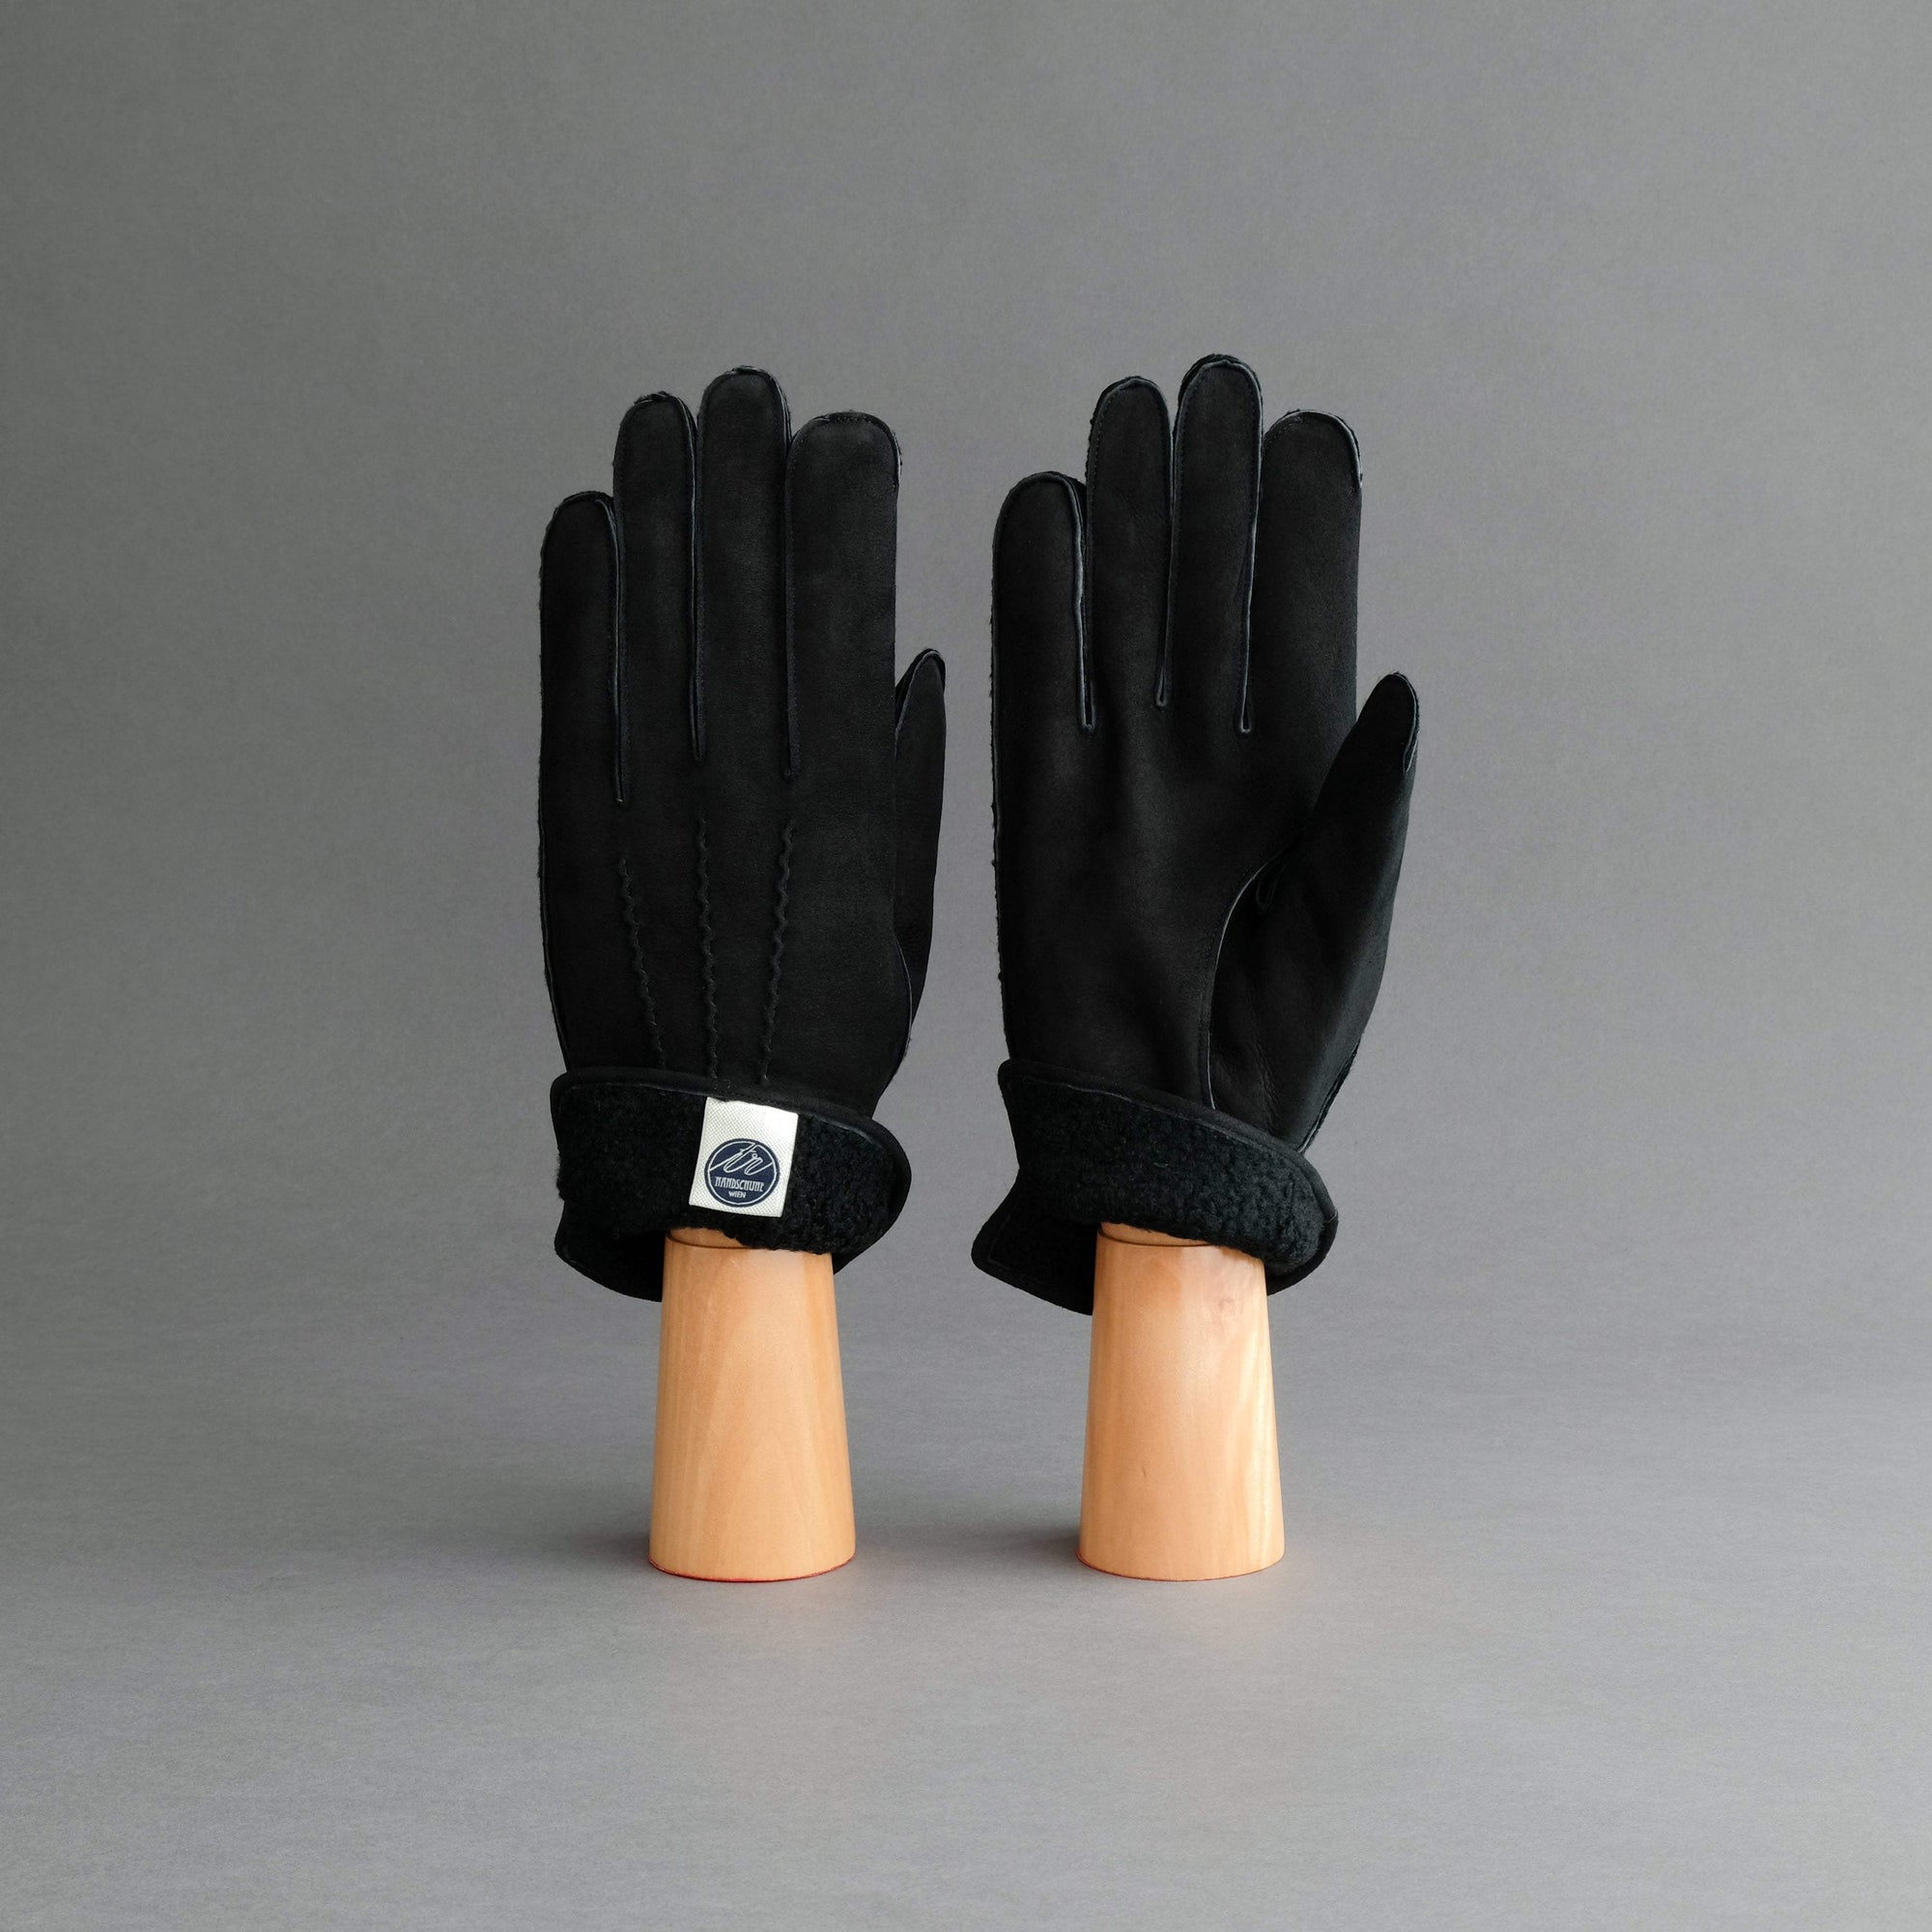 Gentlemen's Gloves From Black Curly Lambskin - TR Handschuhe Wien - Thomas Riemer Handmade Gloves